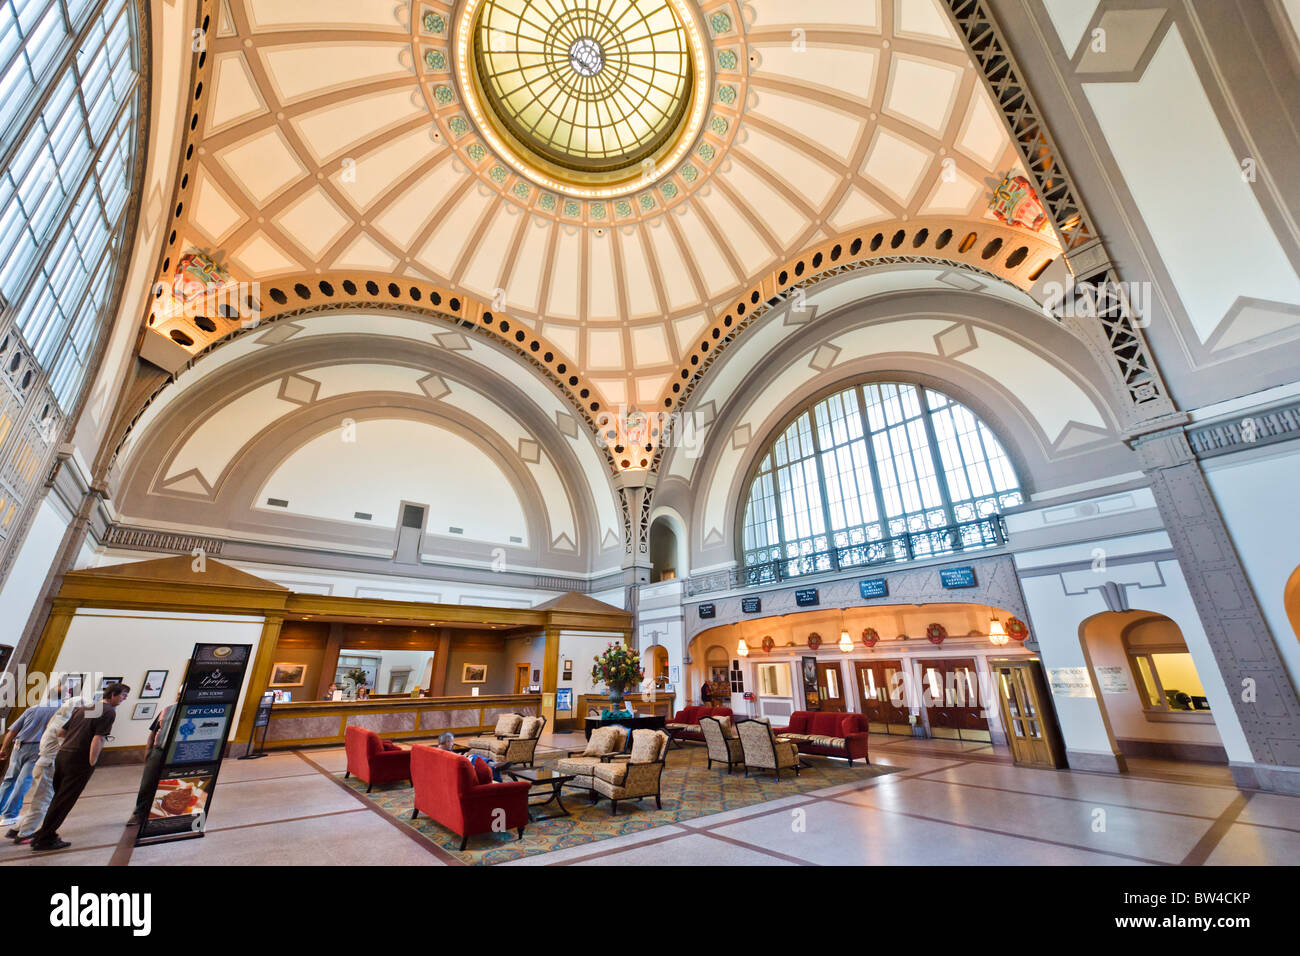 Die Lobby des Chattanooga Choo Choo Hotels, ehemals Kopfbahnhof, Chattanooga, Tennessee, USA Stockfoto